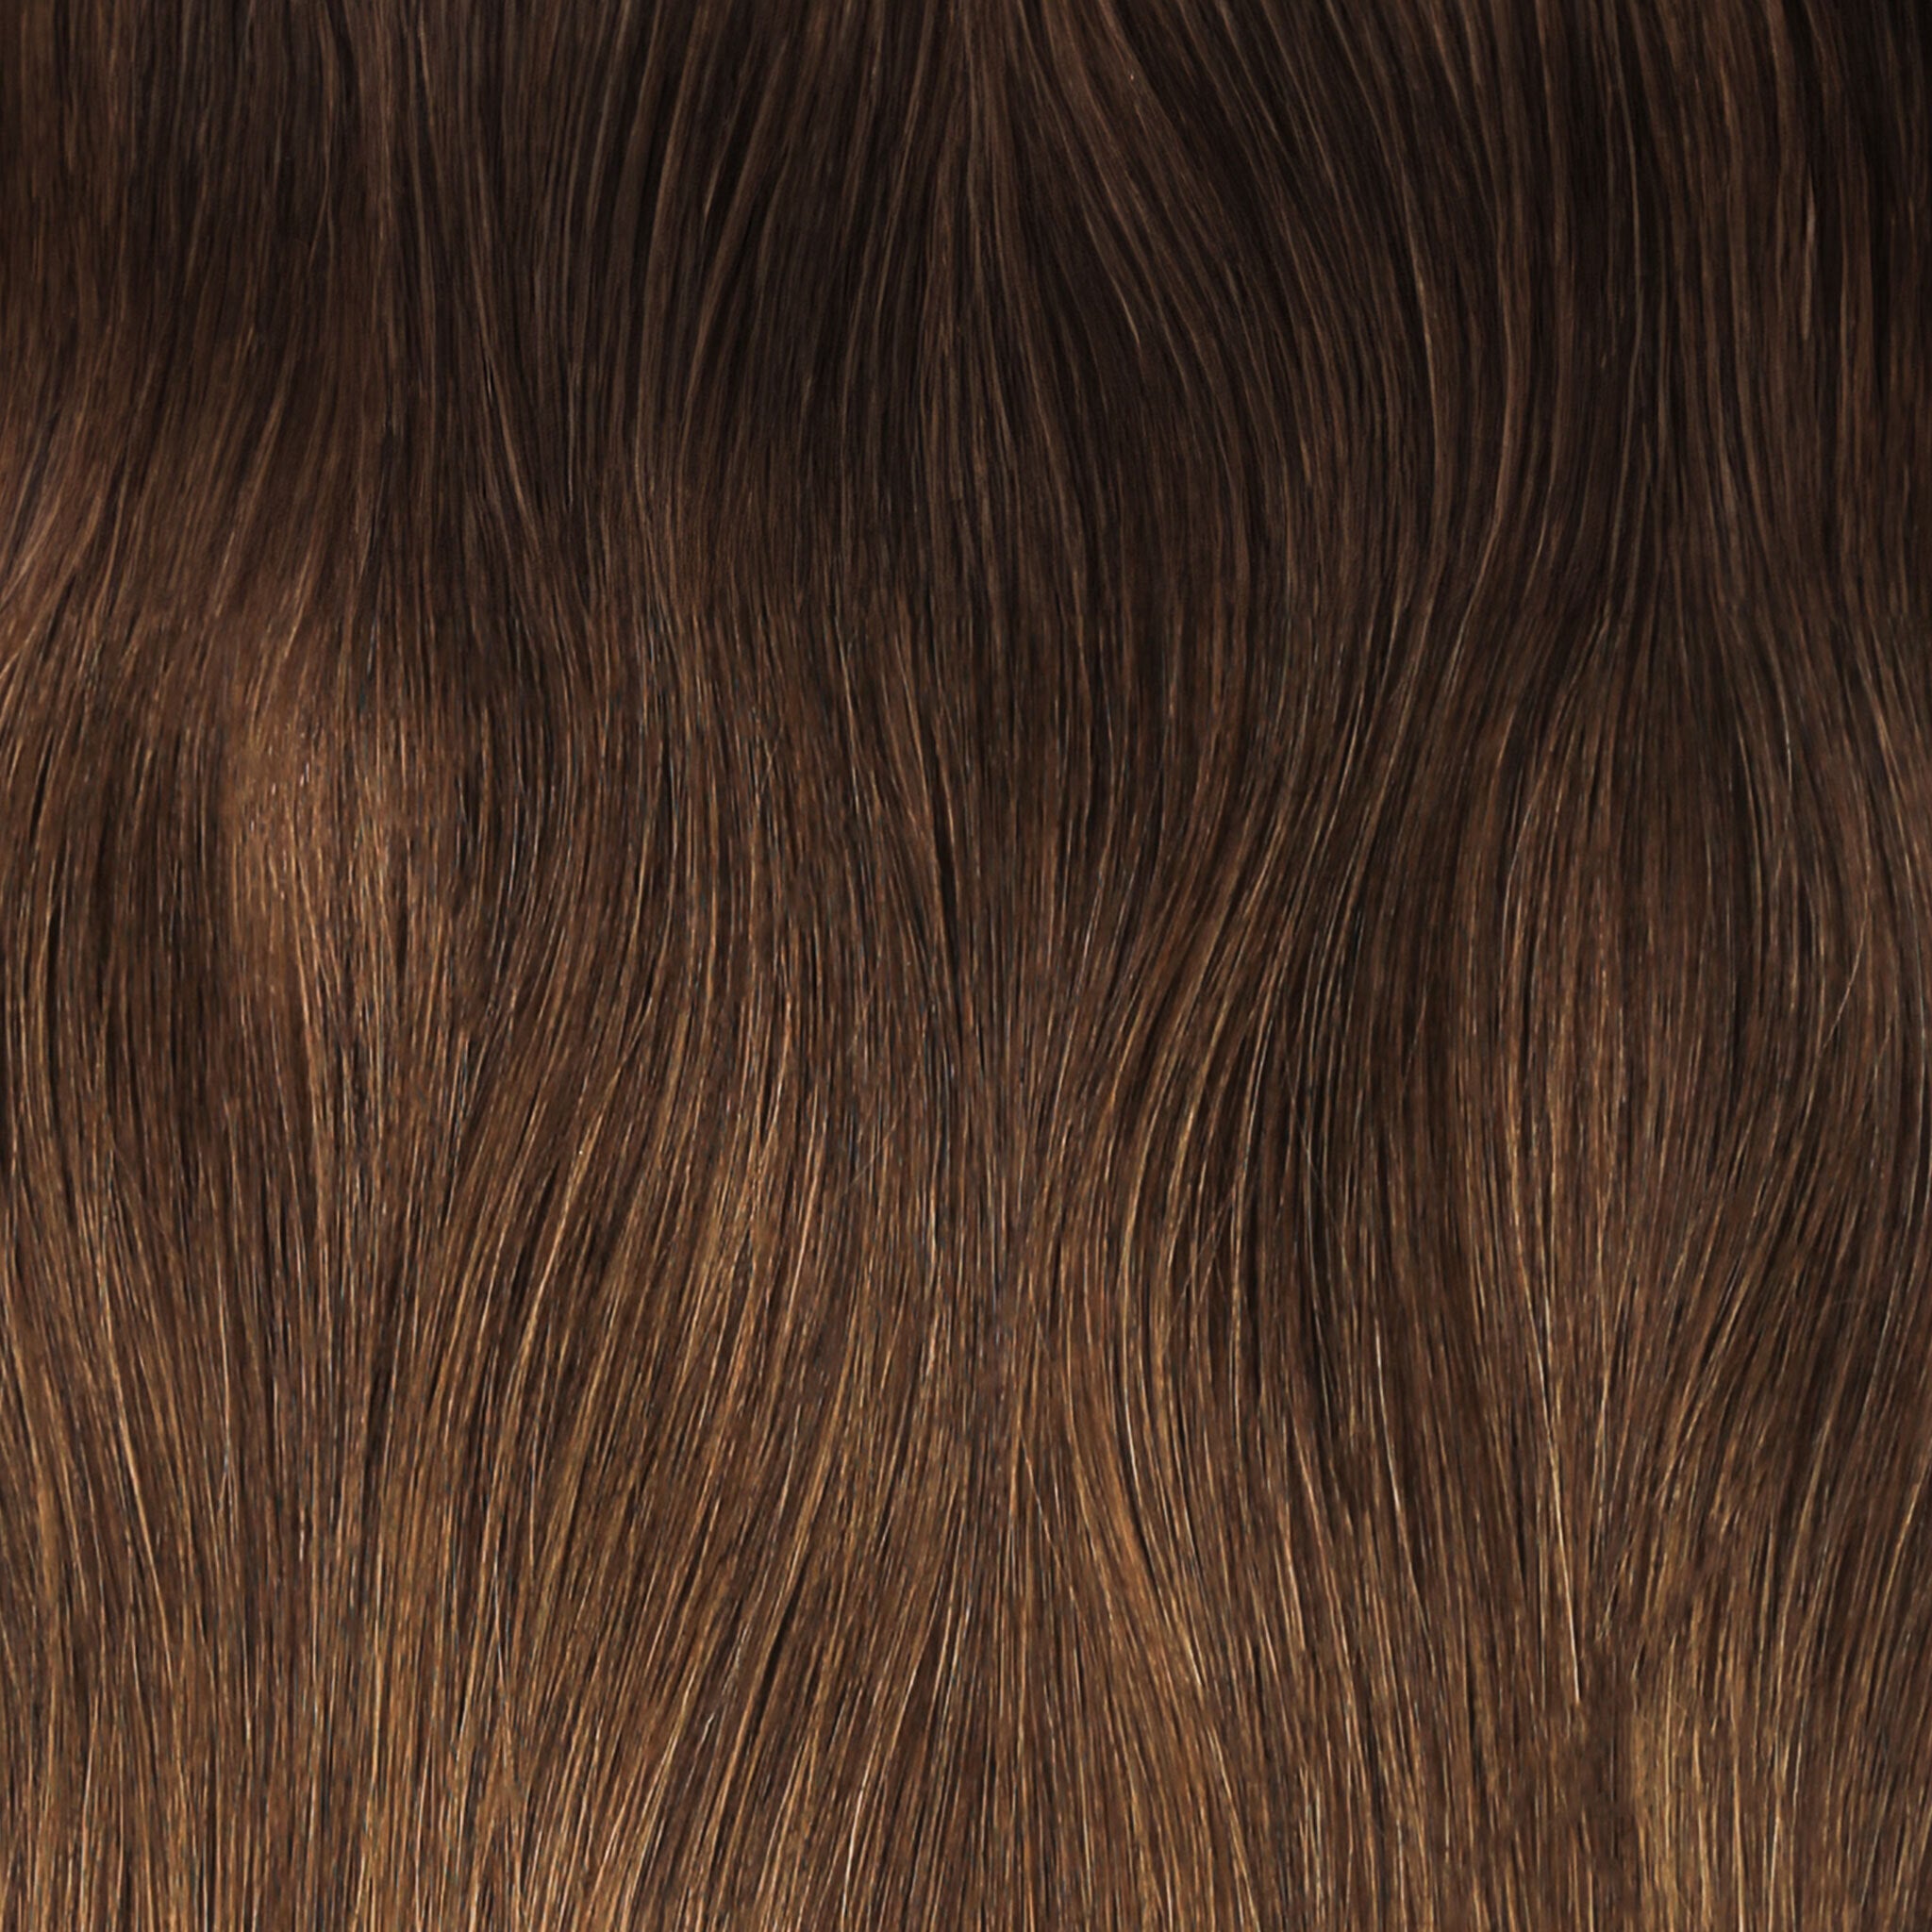 #4 Medium Brown Ultra Narrow Clip In Hair Extension